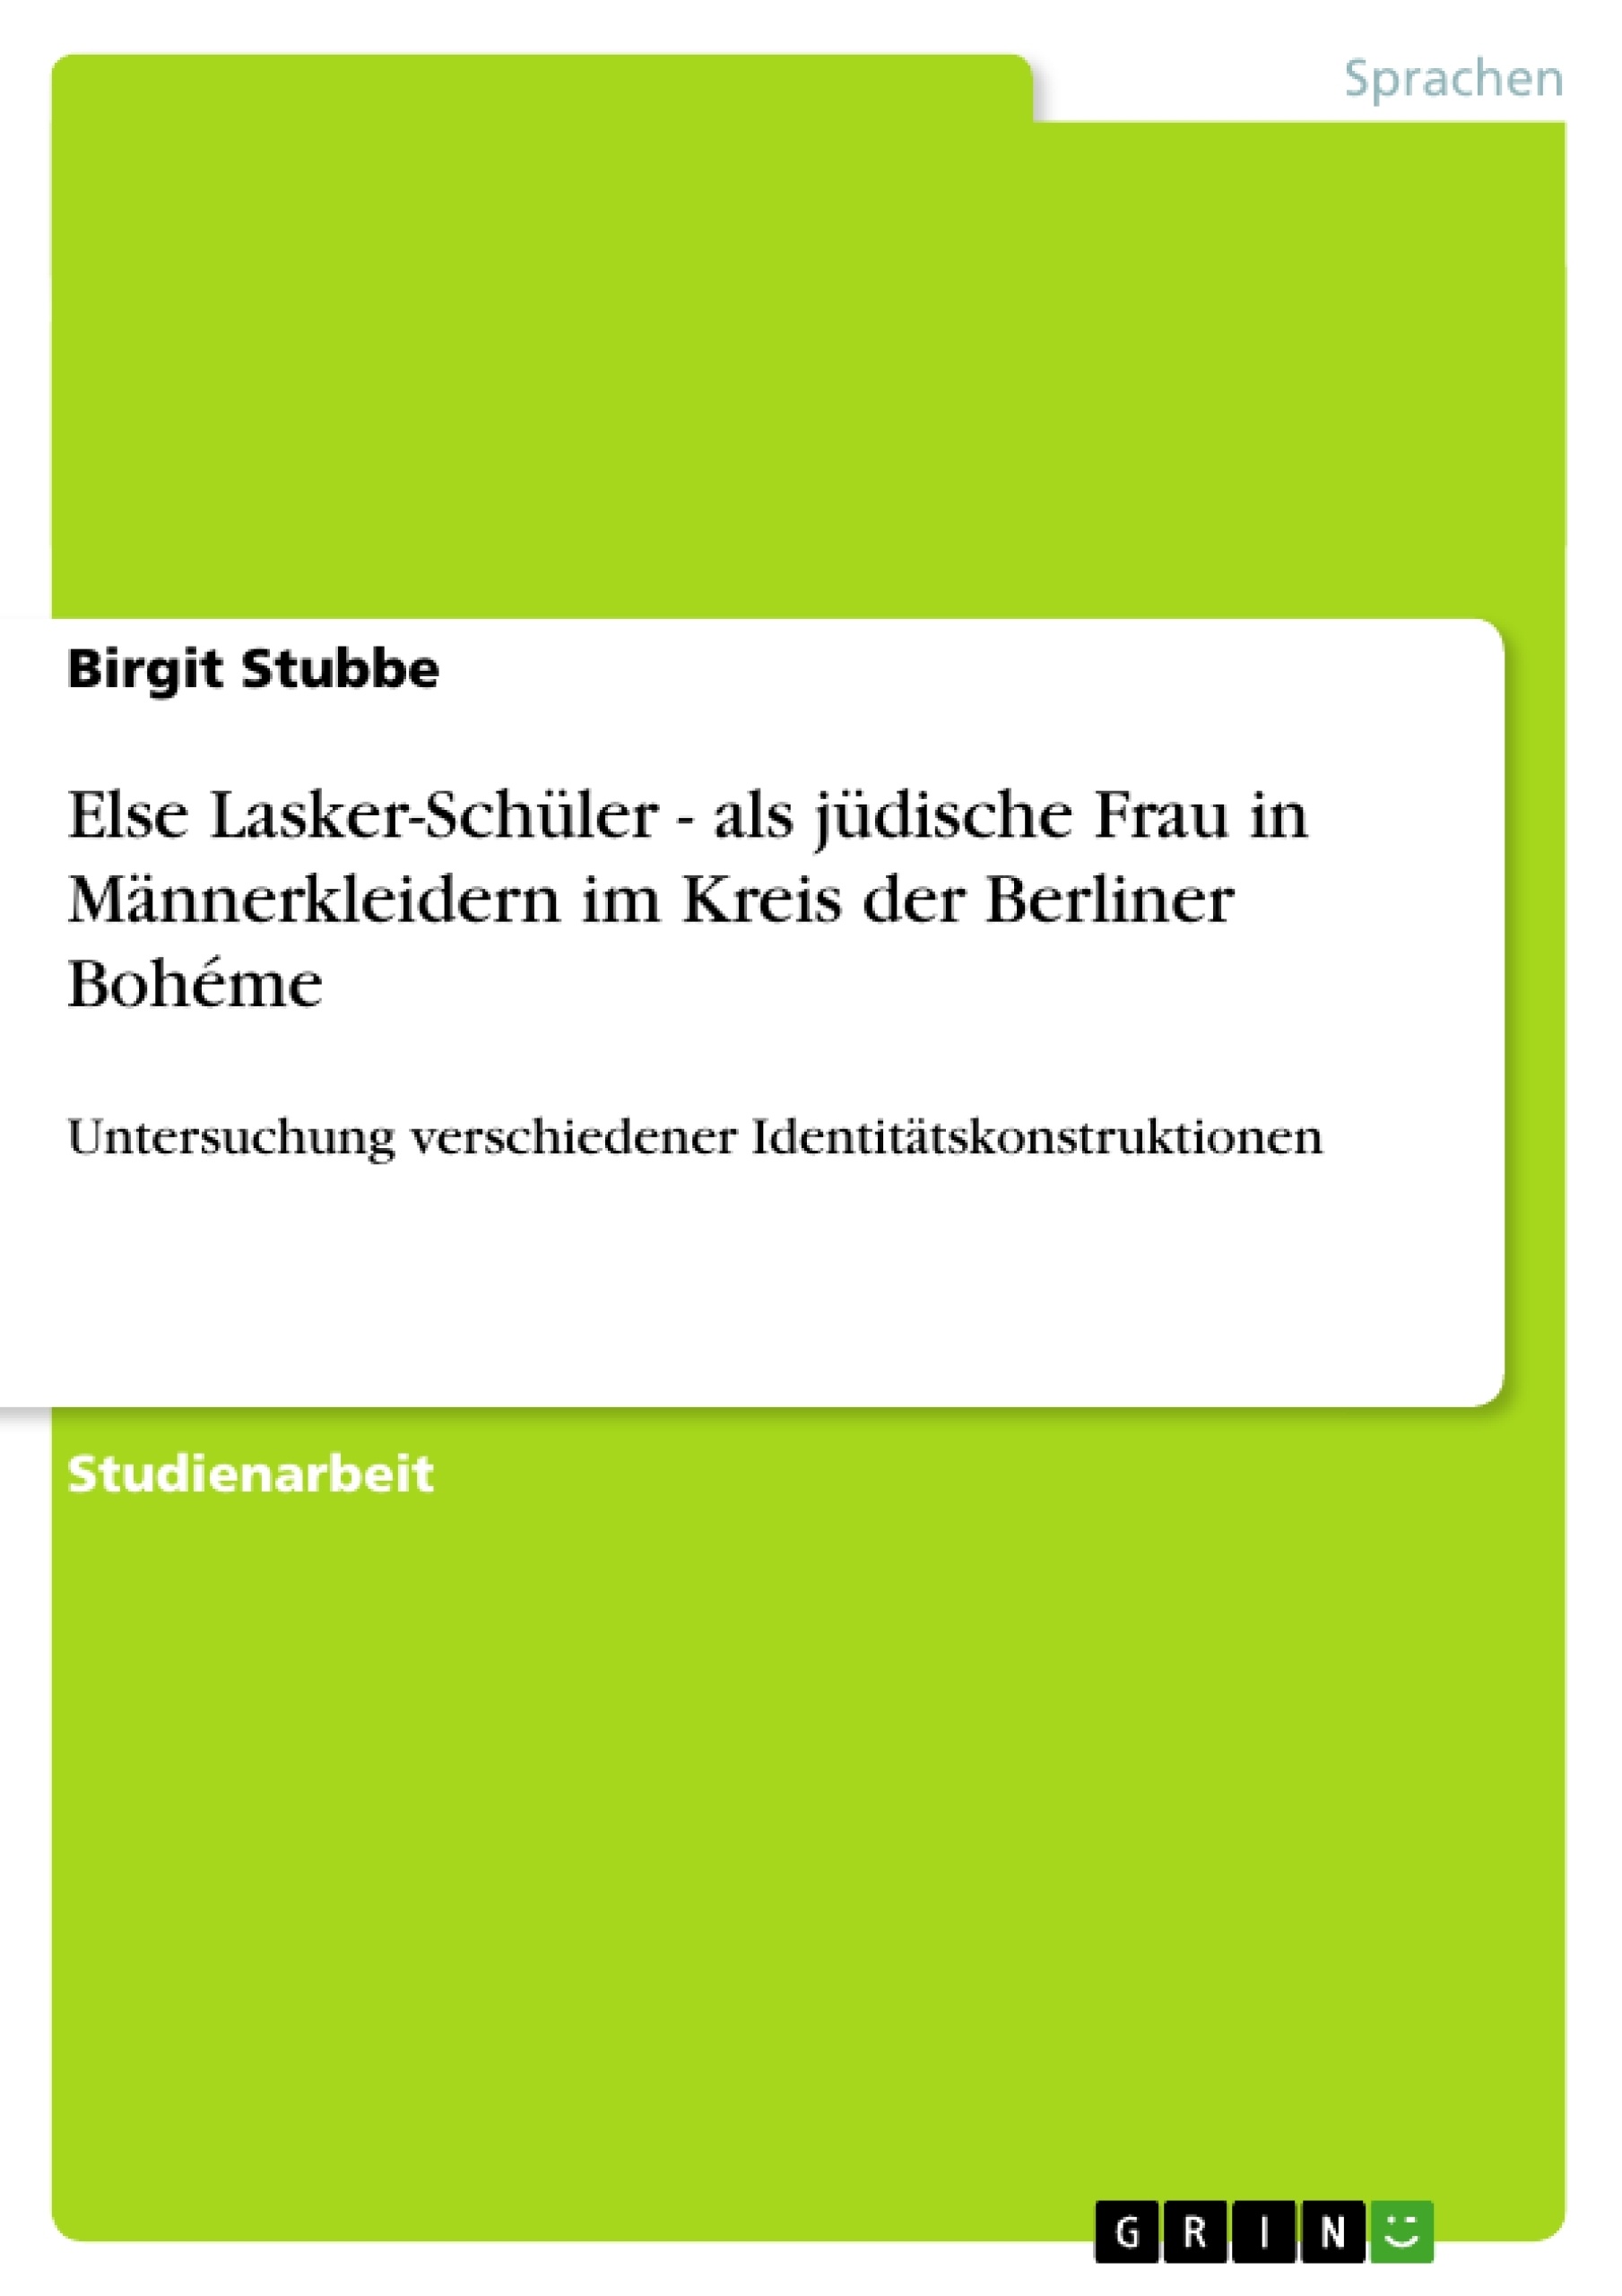 Título: Else Lasker-Schüler - als jüdische Frau in Männerkleidern im Kreis der Berliner Bohéme